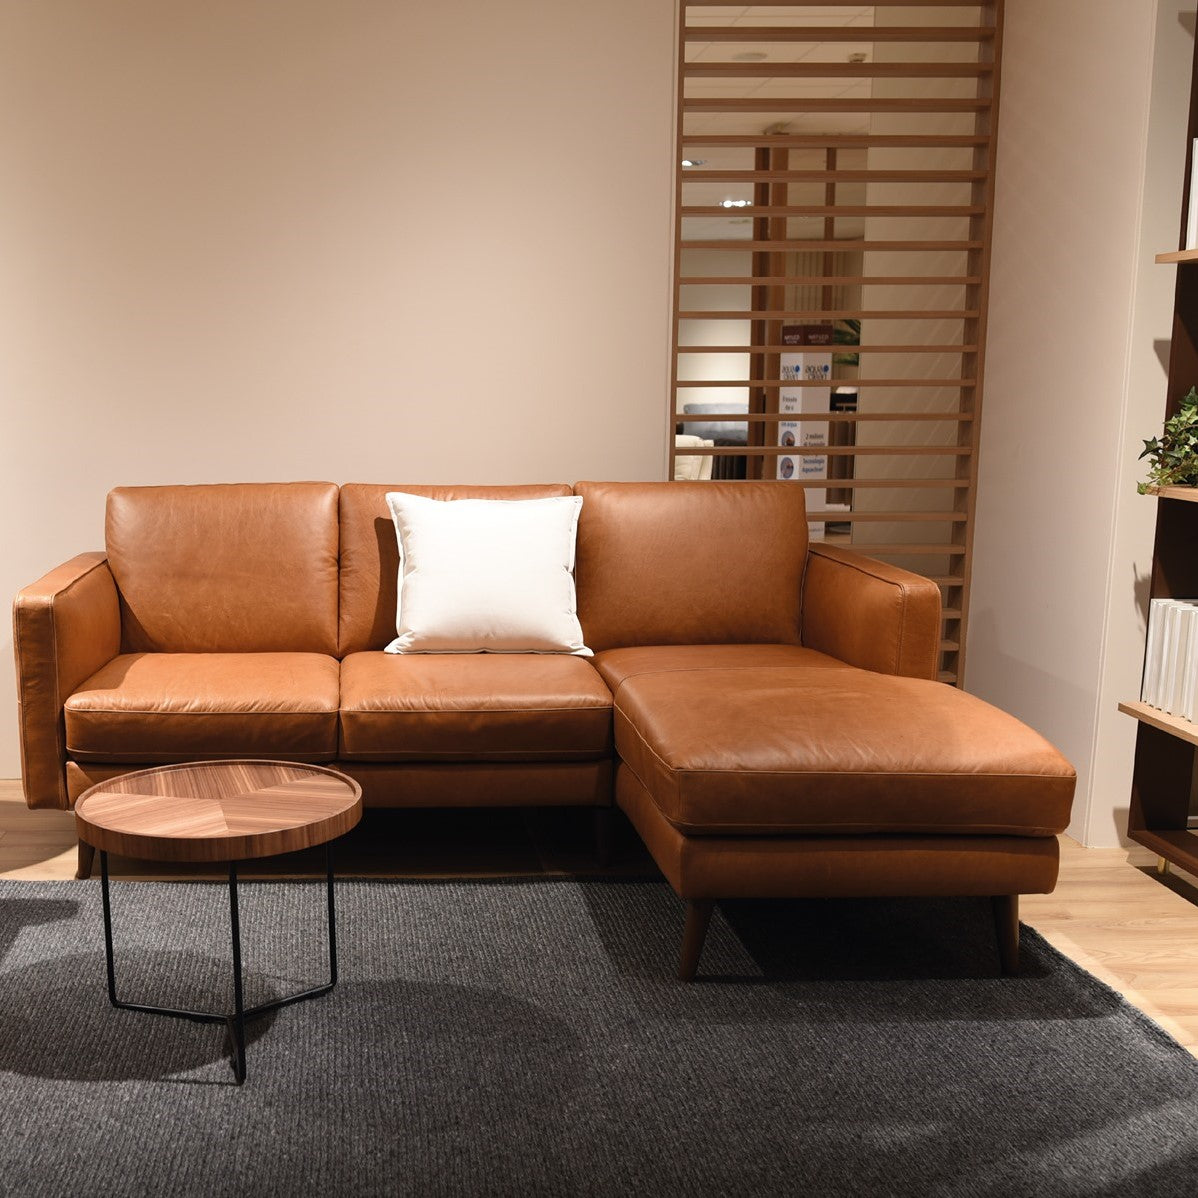 Natuzzi Editions Destrezza C092 Modular Sofa. Available from your Natuzzi Stockist Make Your House A Home, Bendigo, Victoria. Australia wide delivery to Melbourne. Italian leather.